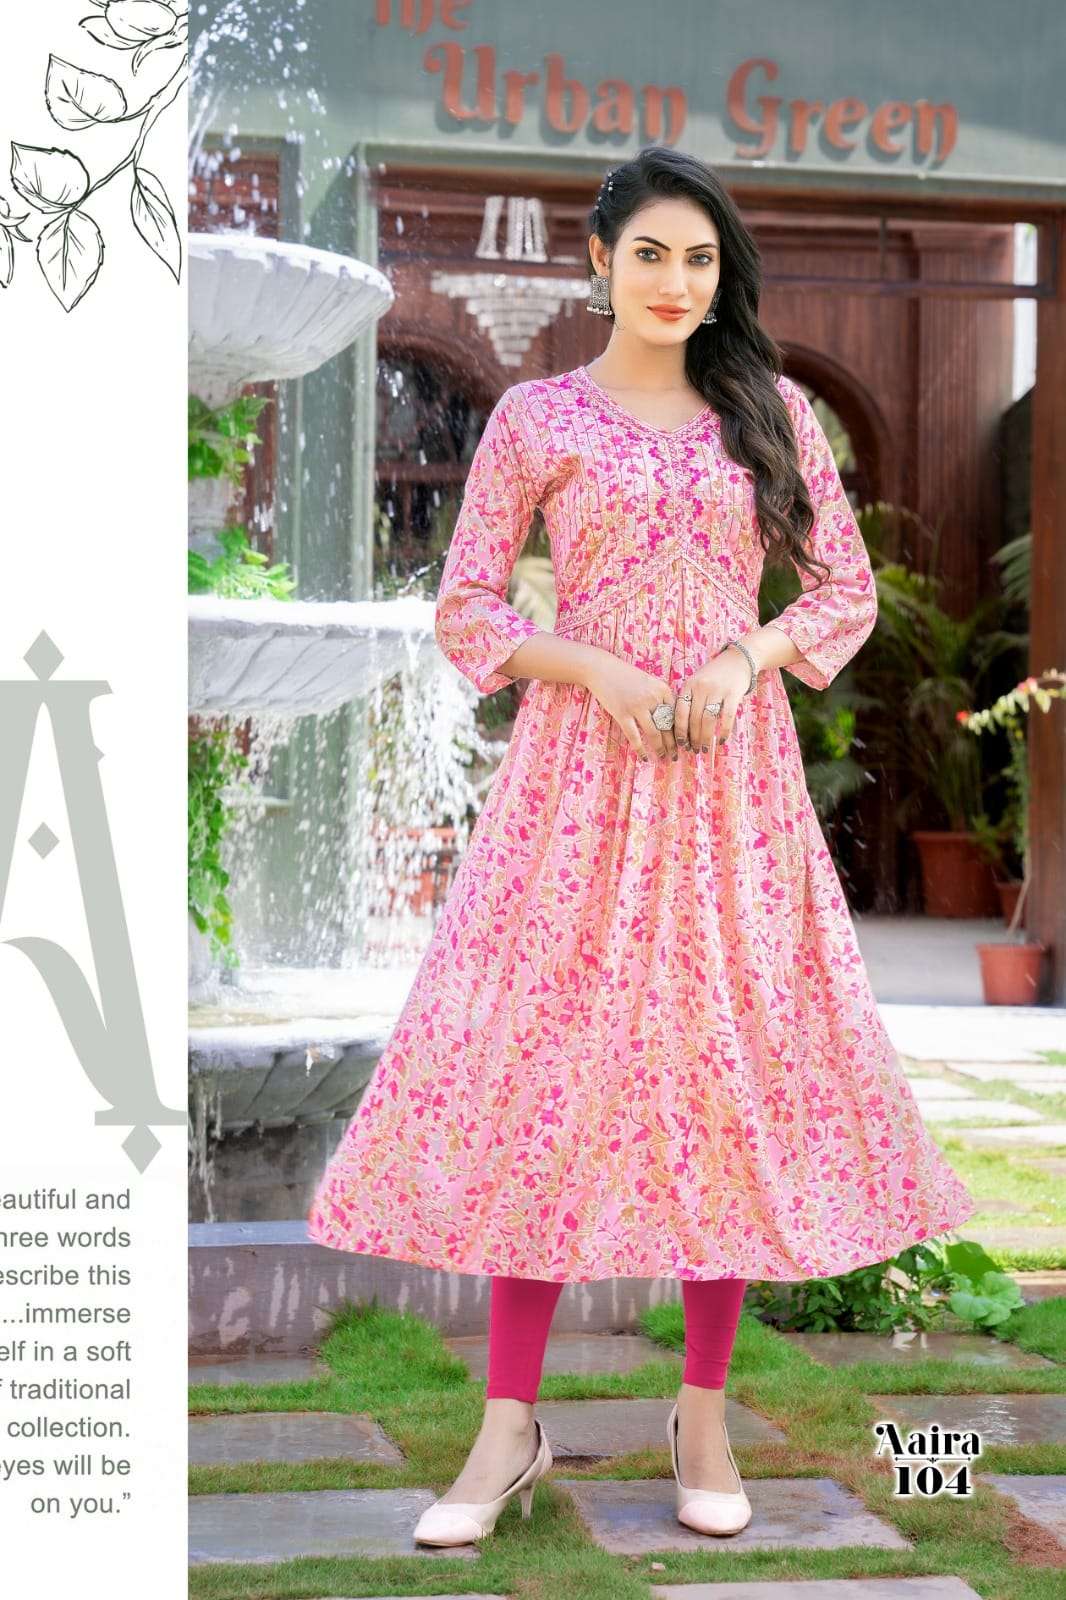 hirwa aaira 101-107 series alia cut festive wear kurtis catalogue wholesale price surat